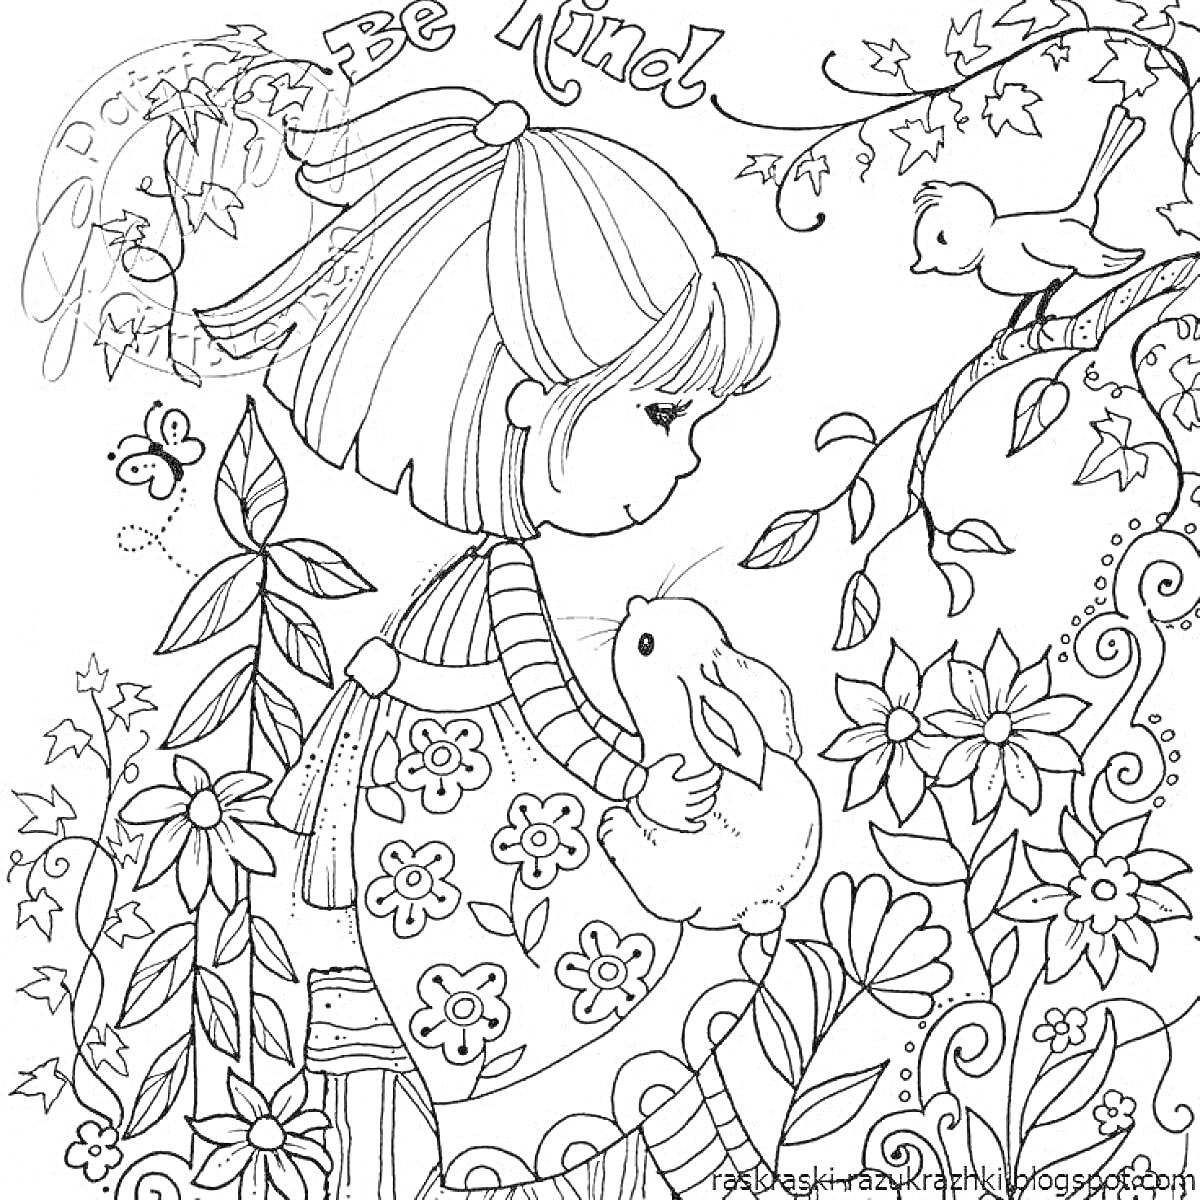 На раскраске изображено: Девочка, Сад, Цветы, Антистресс, Природа, Доброта